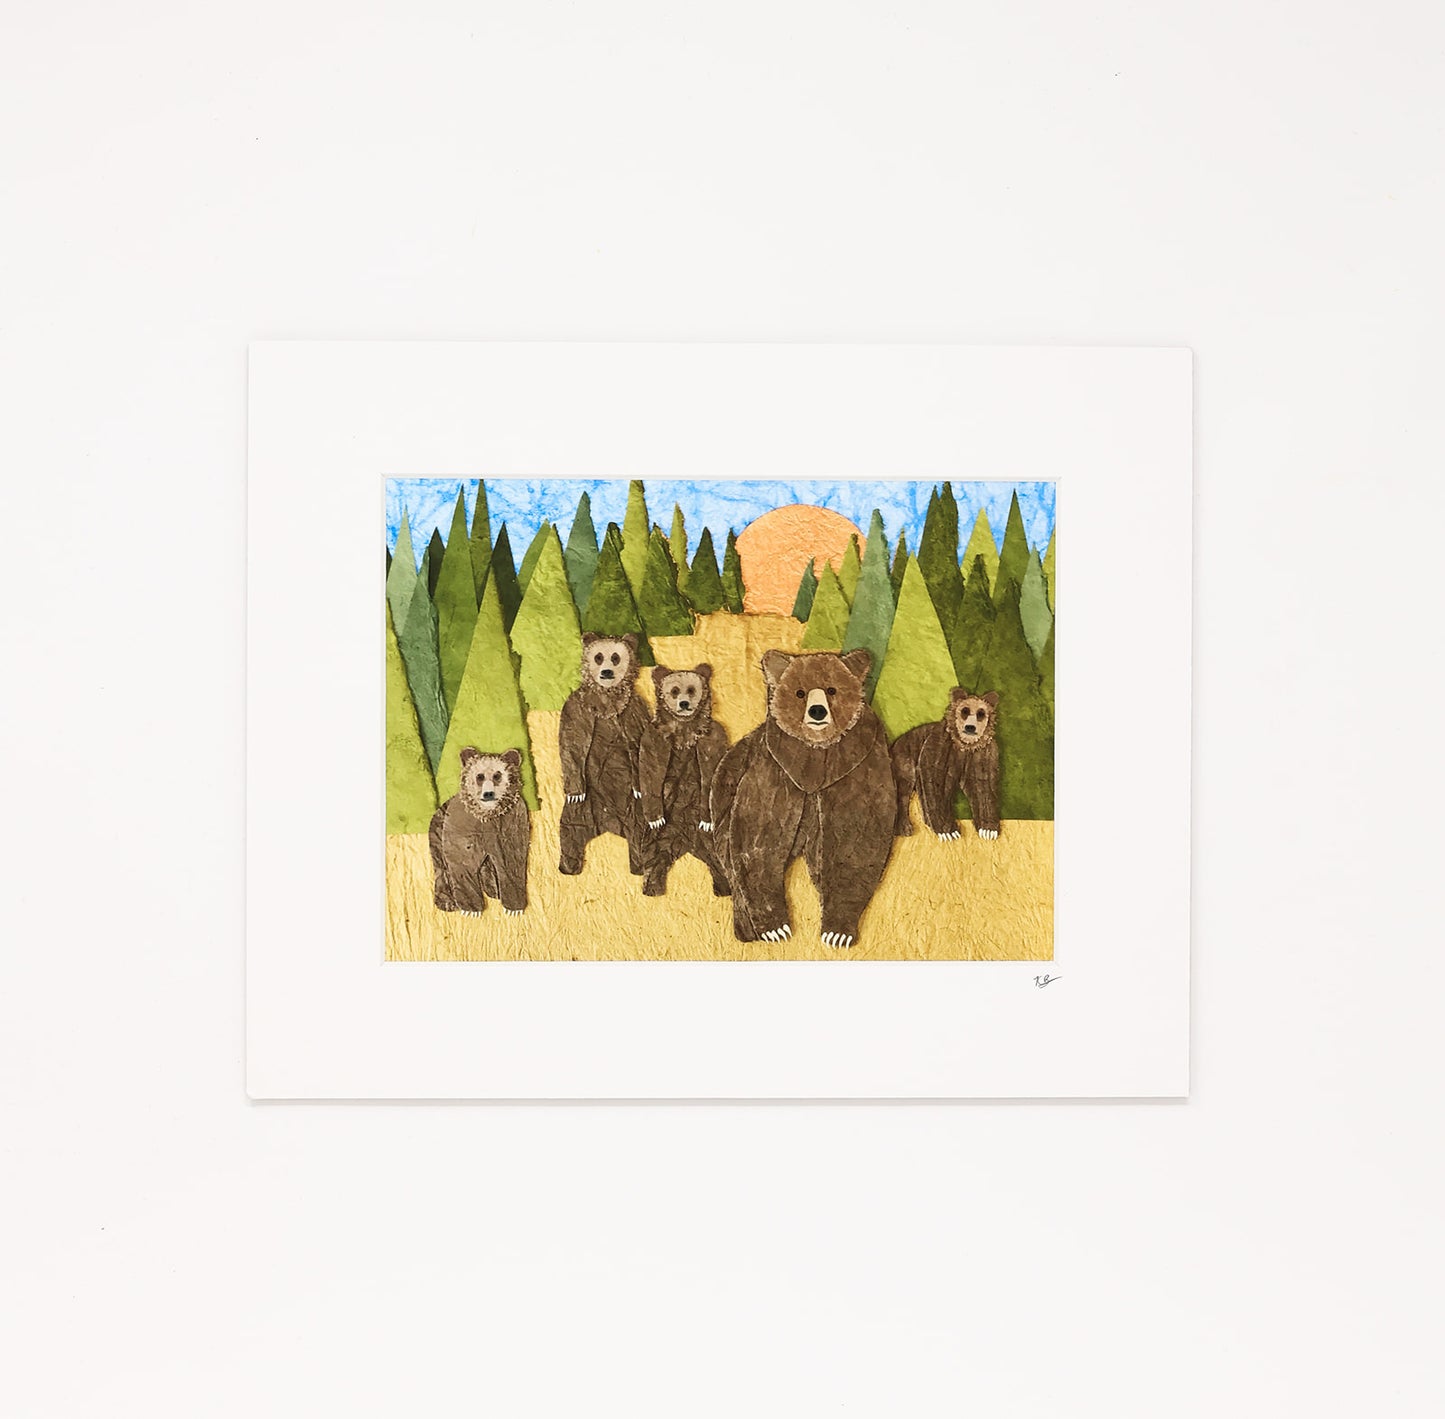 Kris Batchelder: 5 x 7 Giclee Print